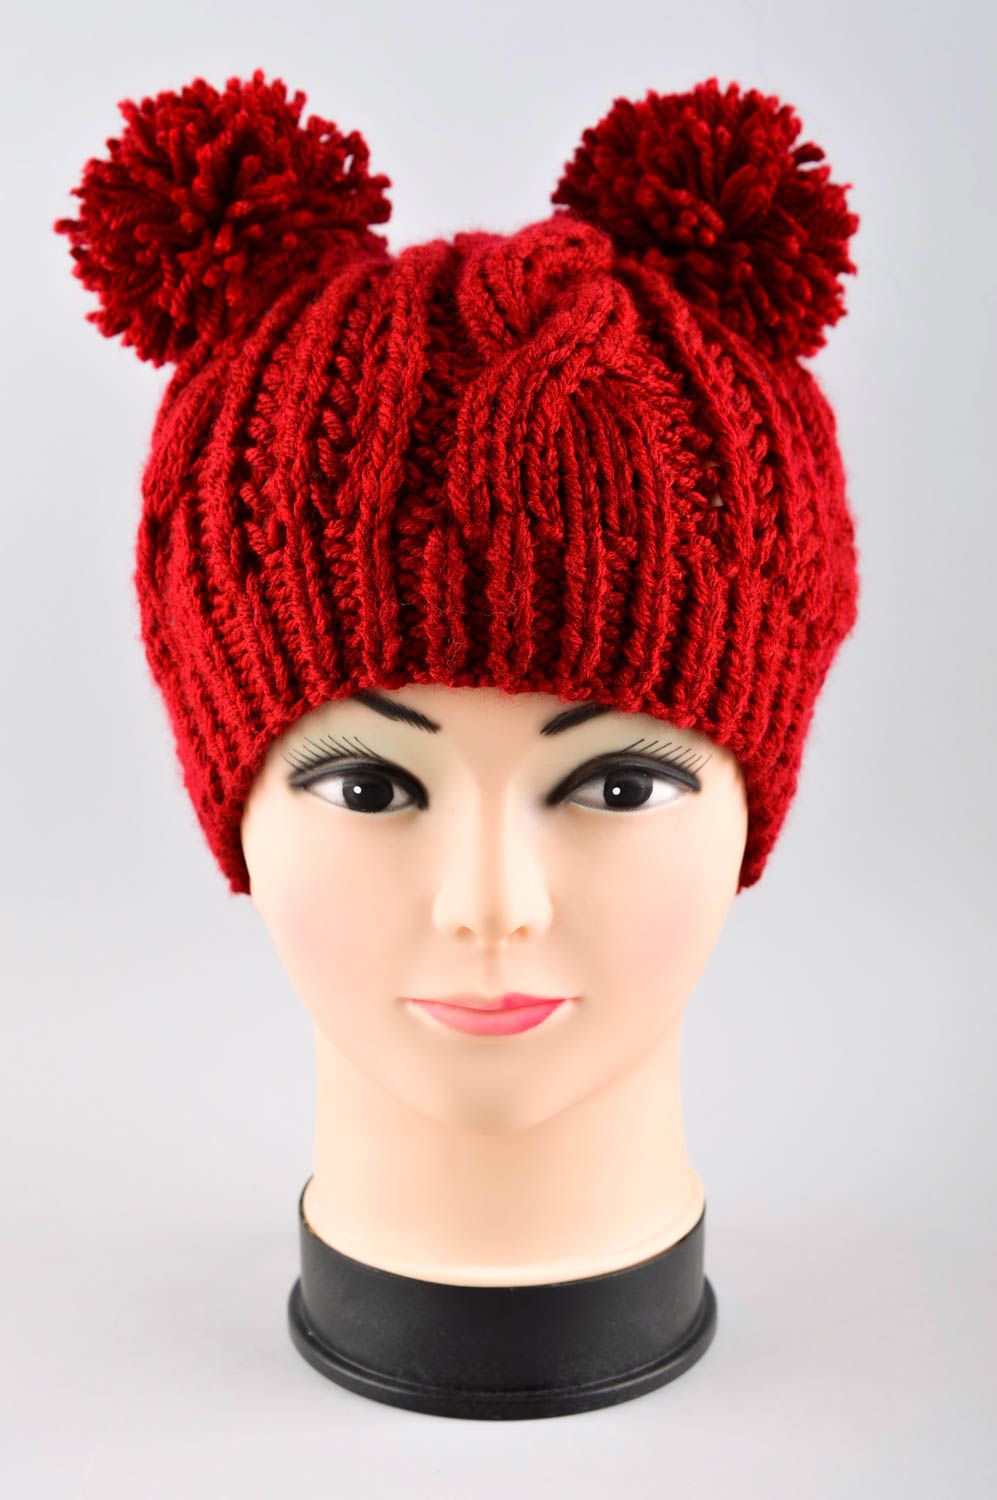 Handmade knitted hat women hat winter accessories stylish hat for girls photo 2